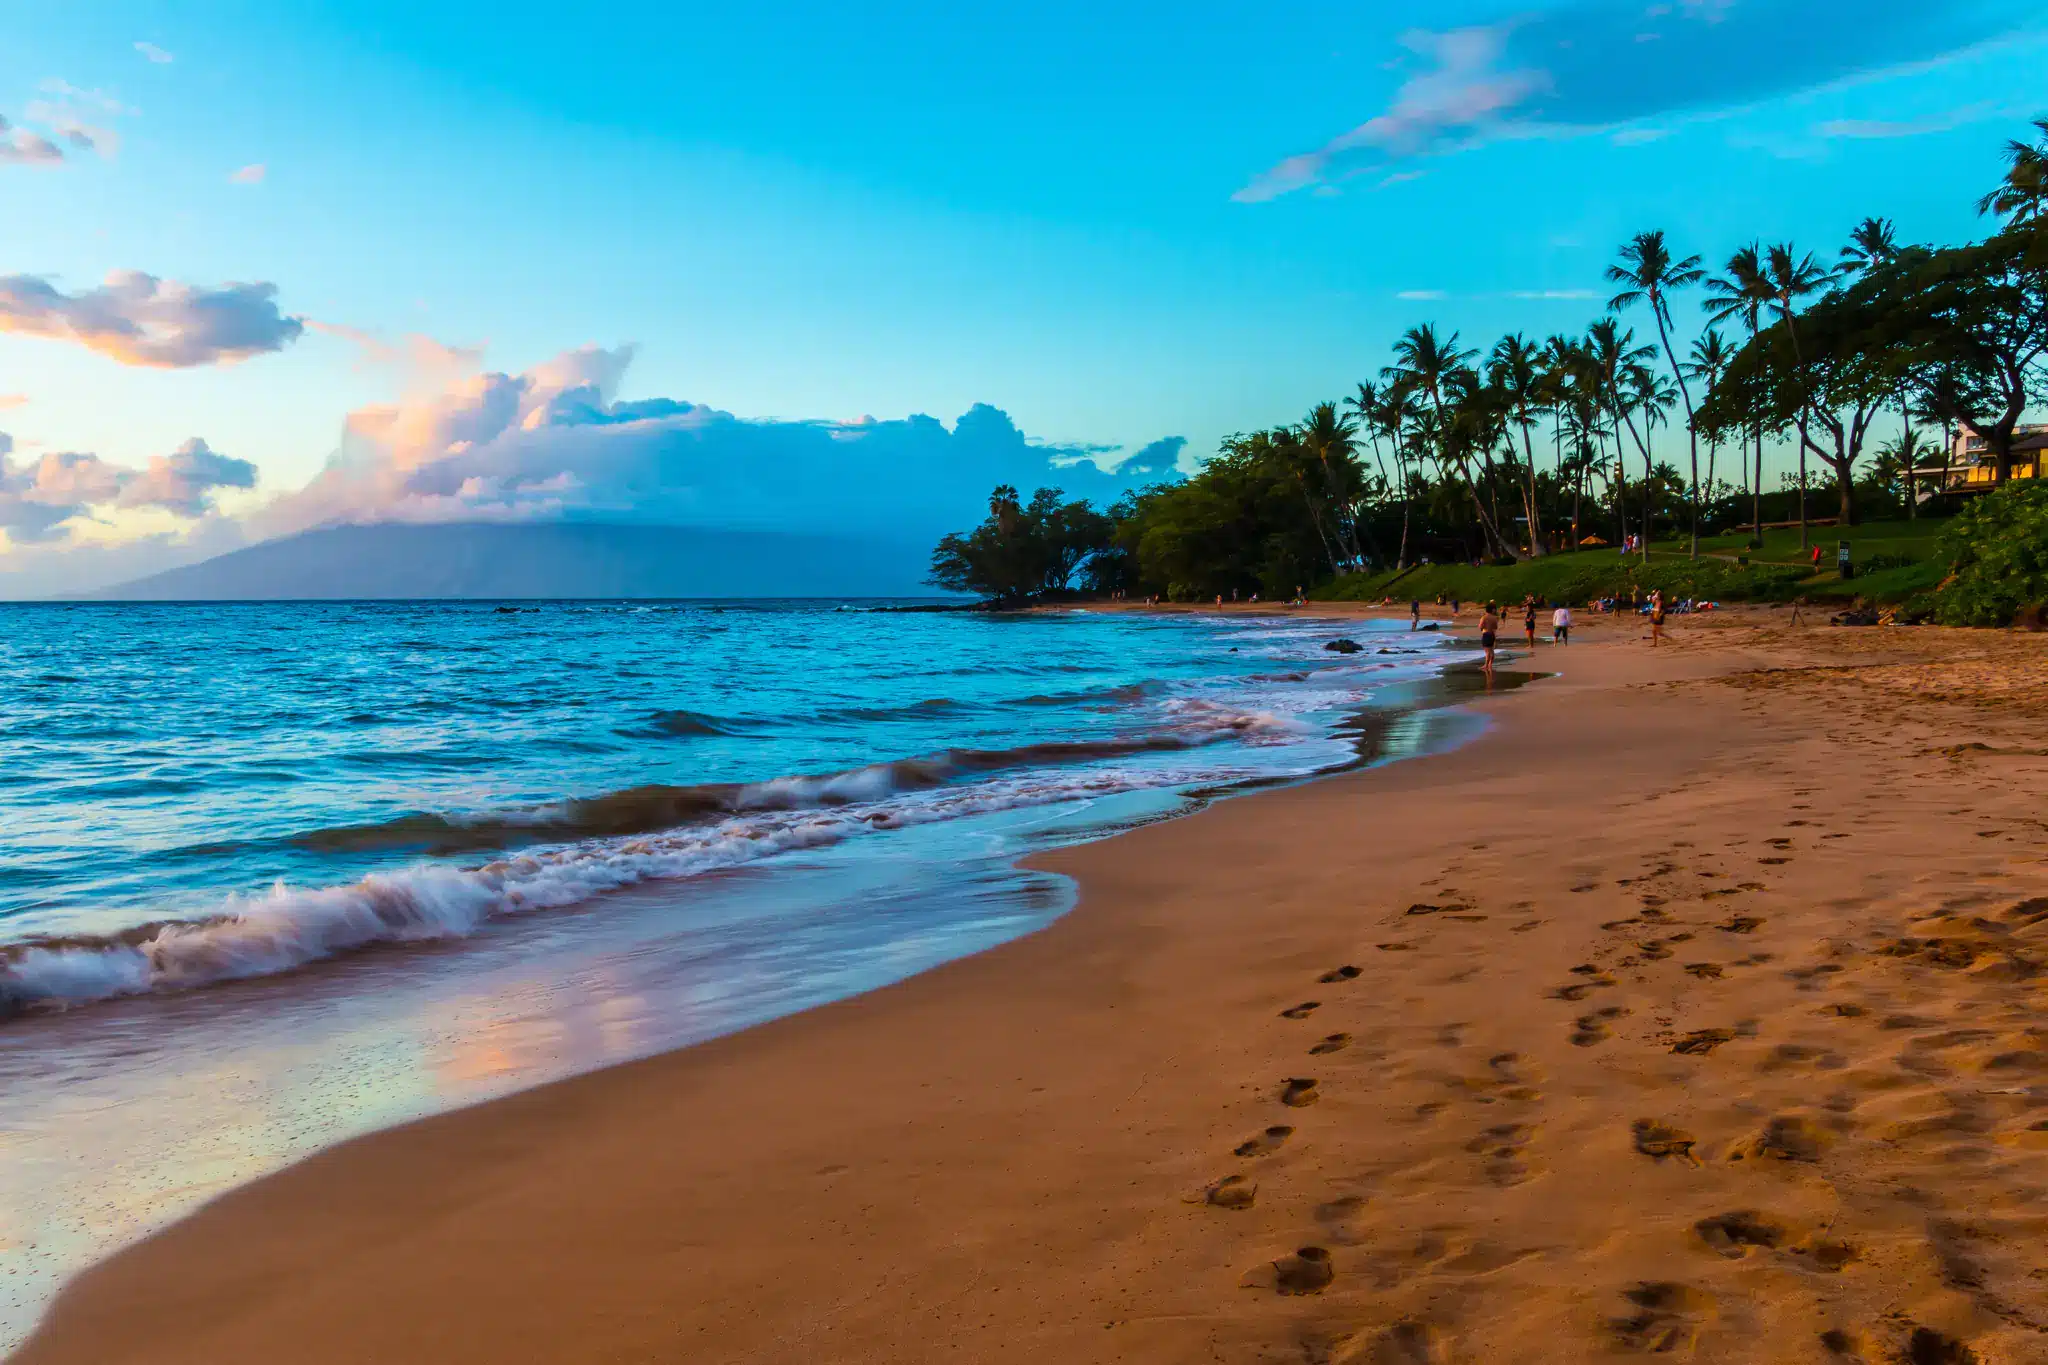 Ulua Beach is a Beach located in the city of Wailea on Maui, Hawaii